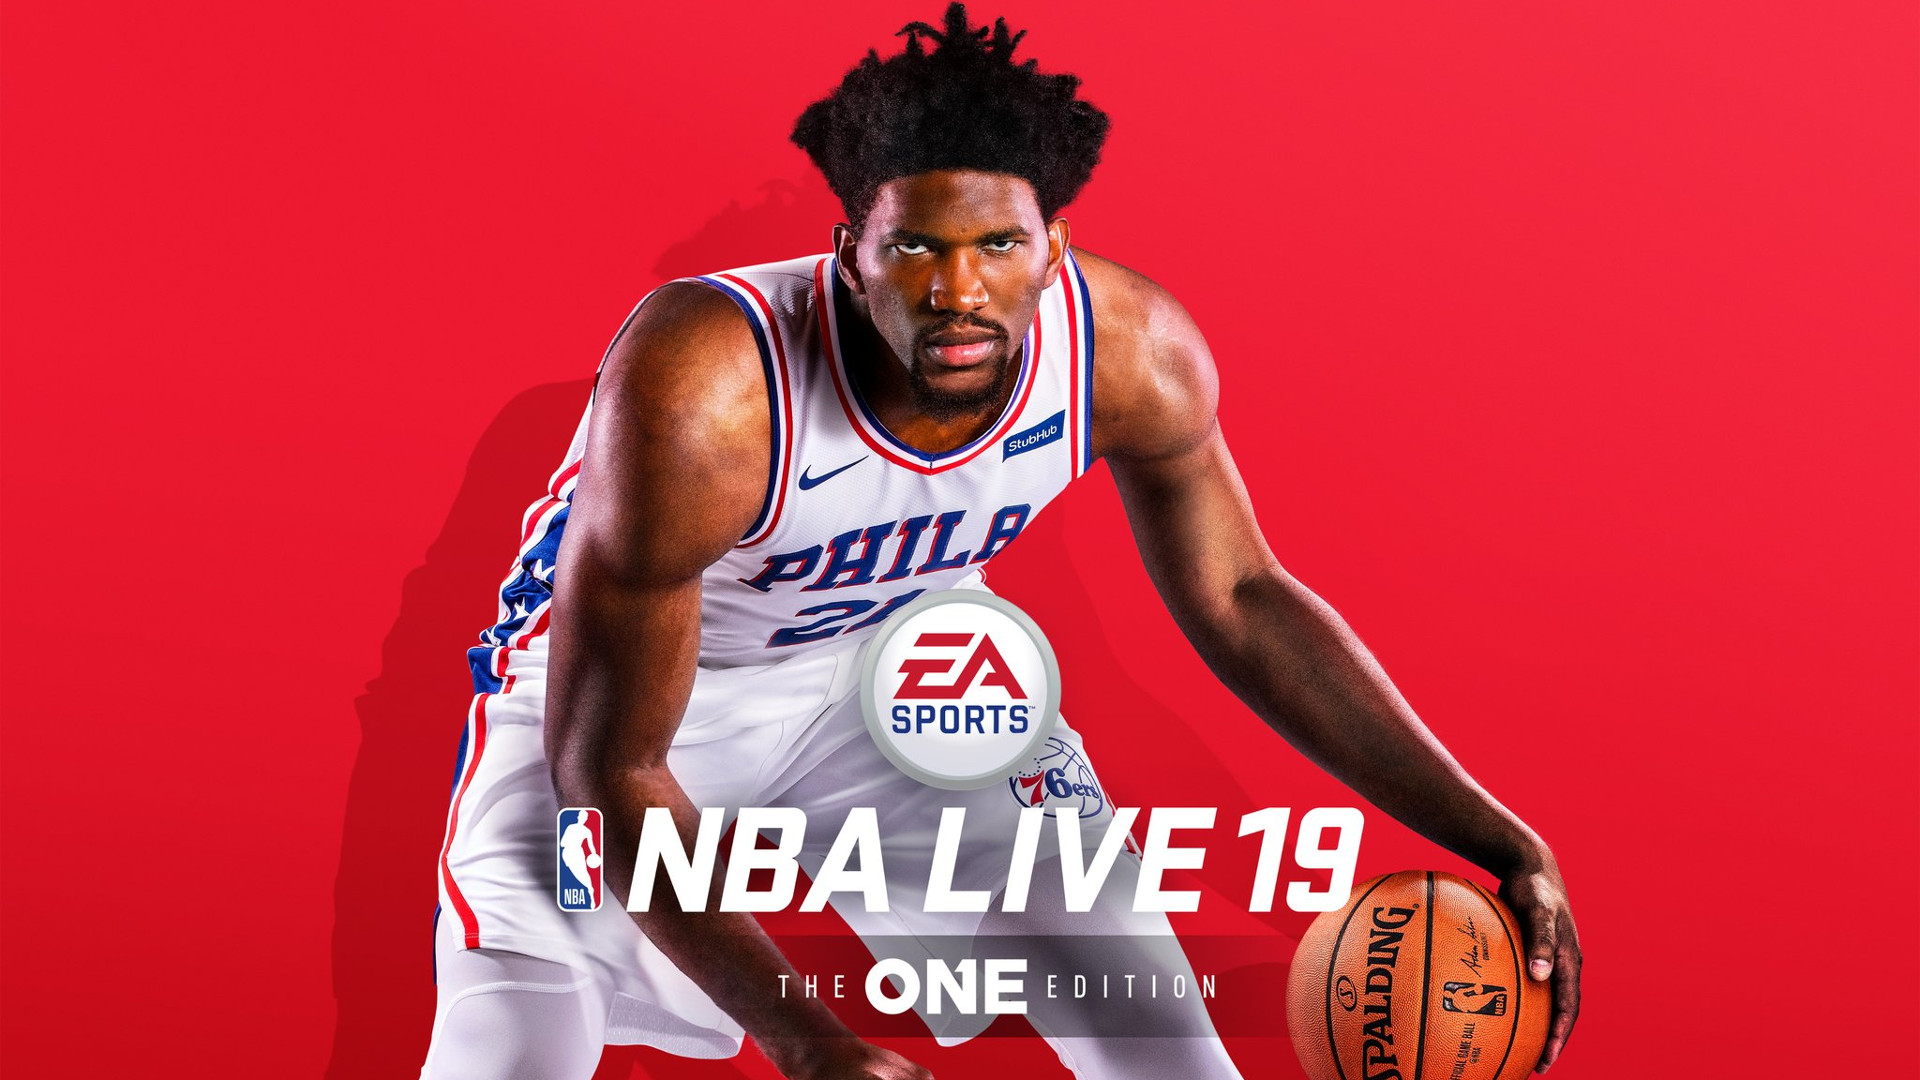 NBA Live 19 cover athlete is Joel Embiid | pastapadre.com